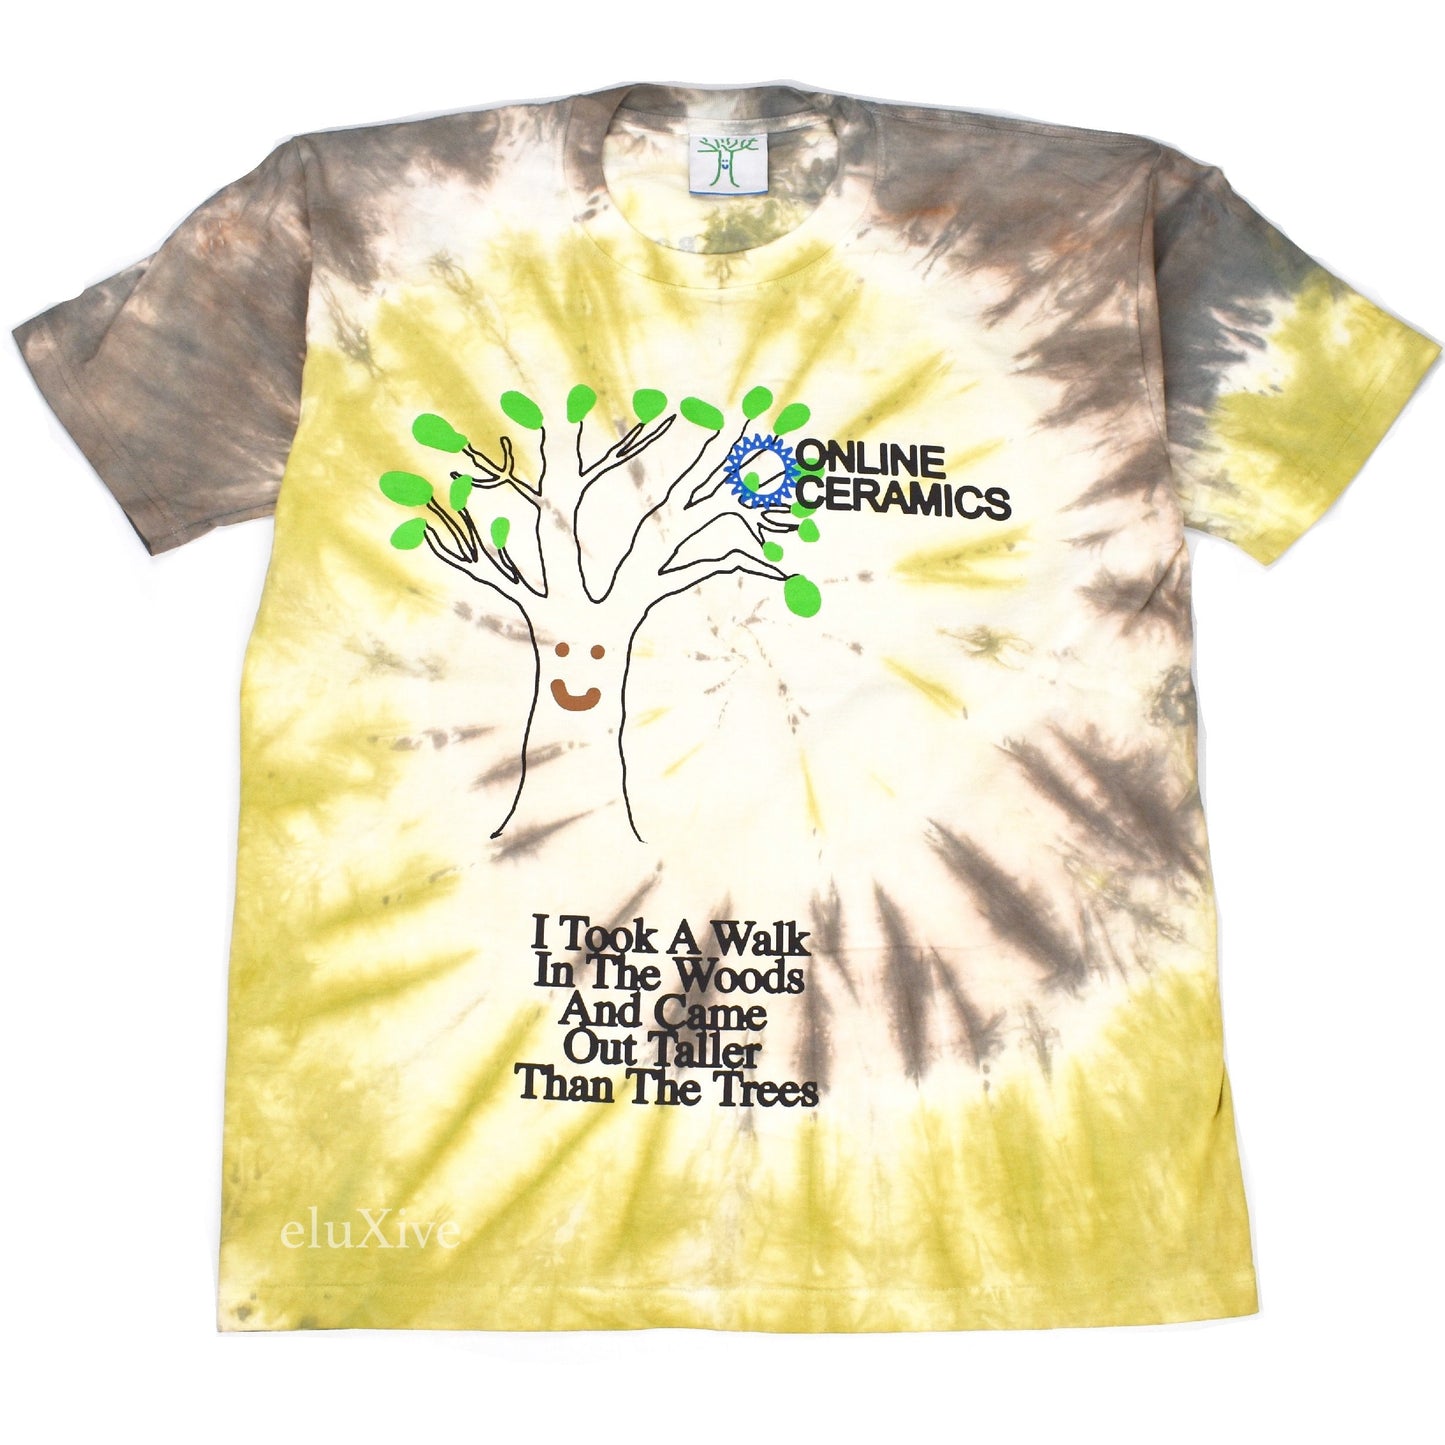 Online Ceramics - Taller Than The Trees Tie-Dye T-Shirt